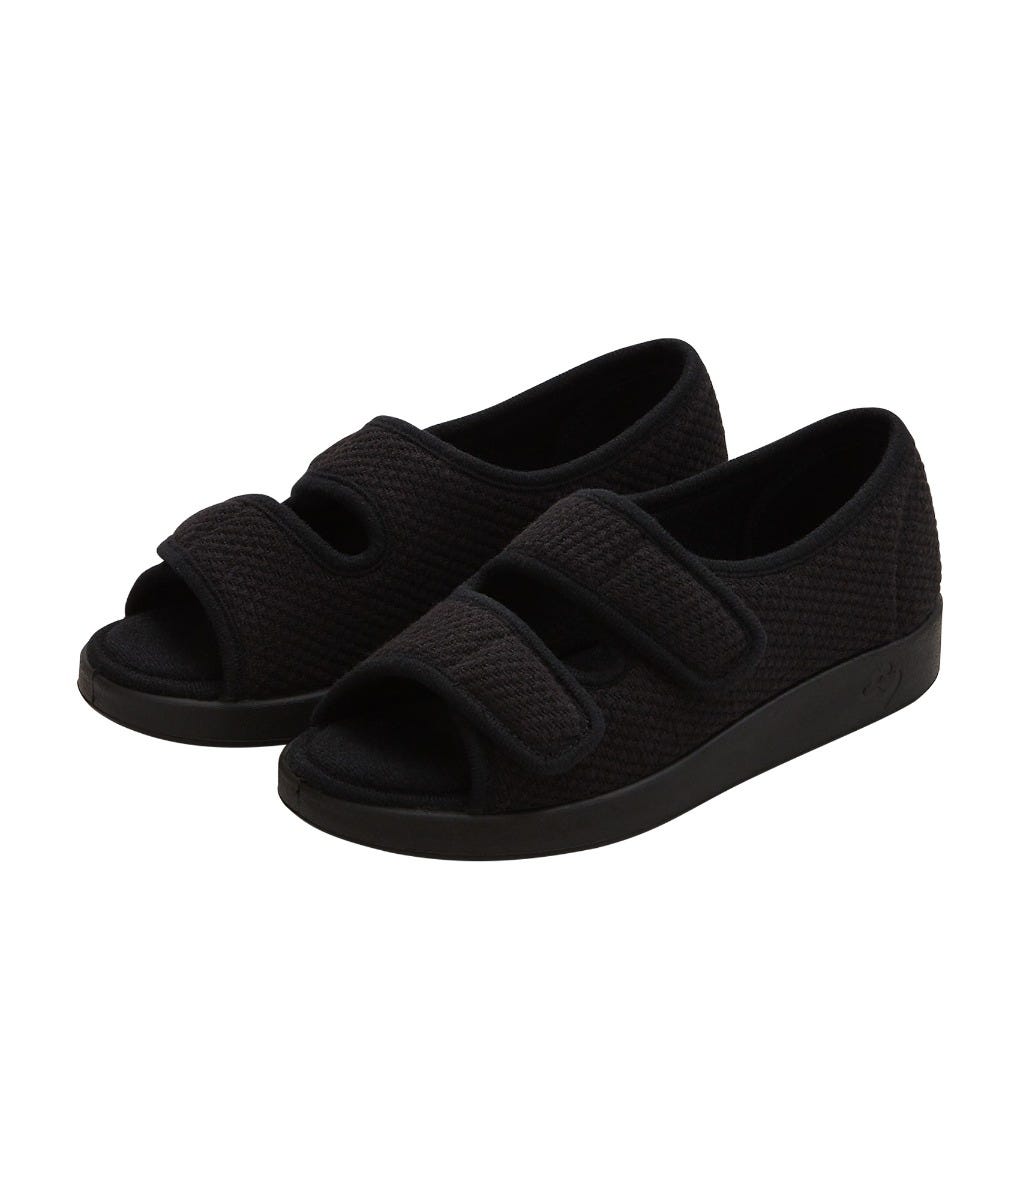 Silverts Women's Easy Closure Sandals - Black - 9